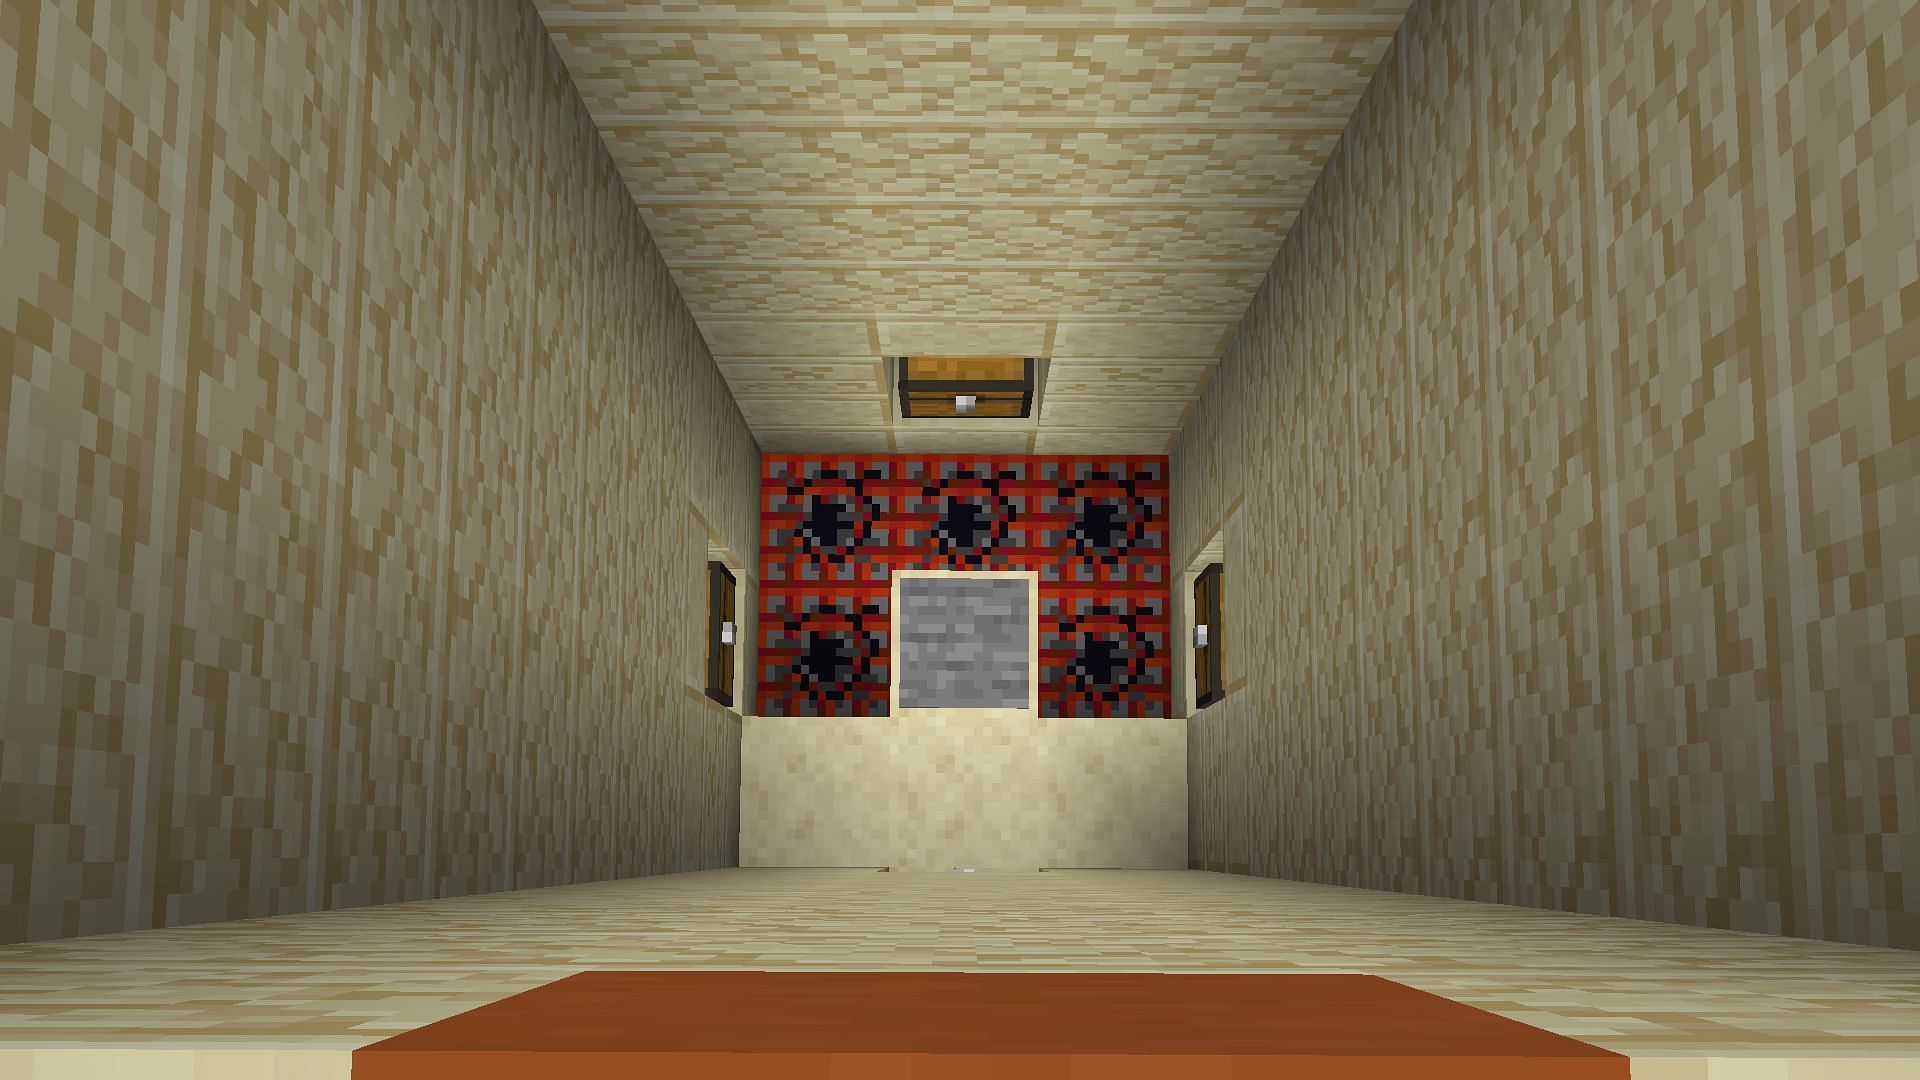 Desert temple chest room has TNT below it (Image via Minecraft)